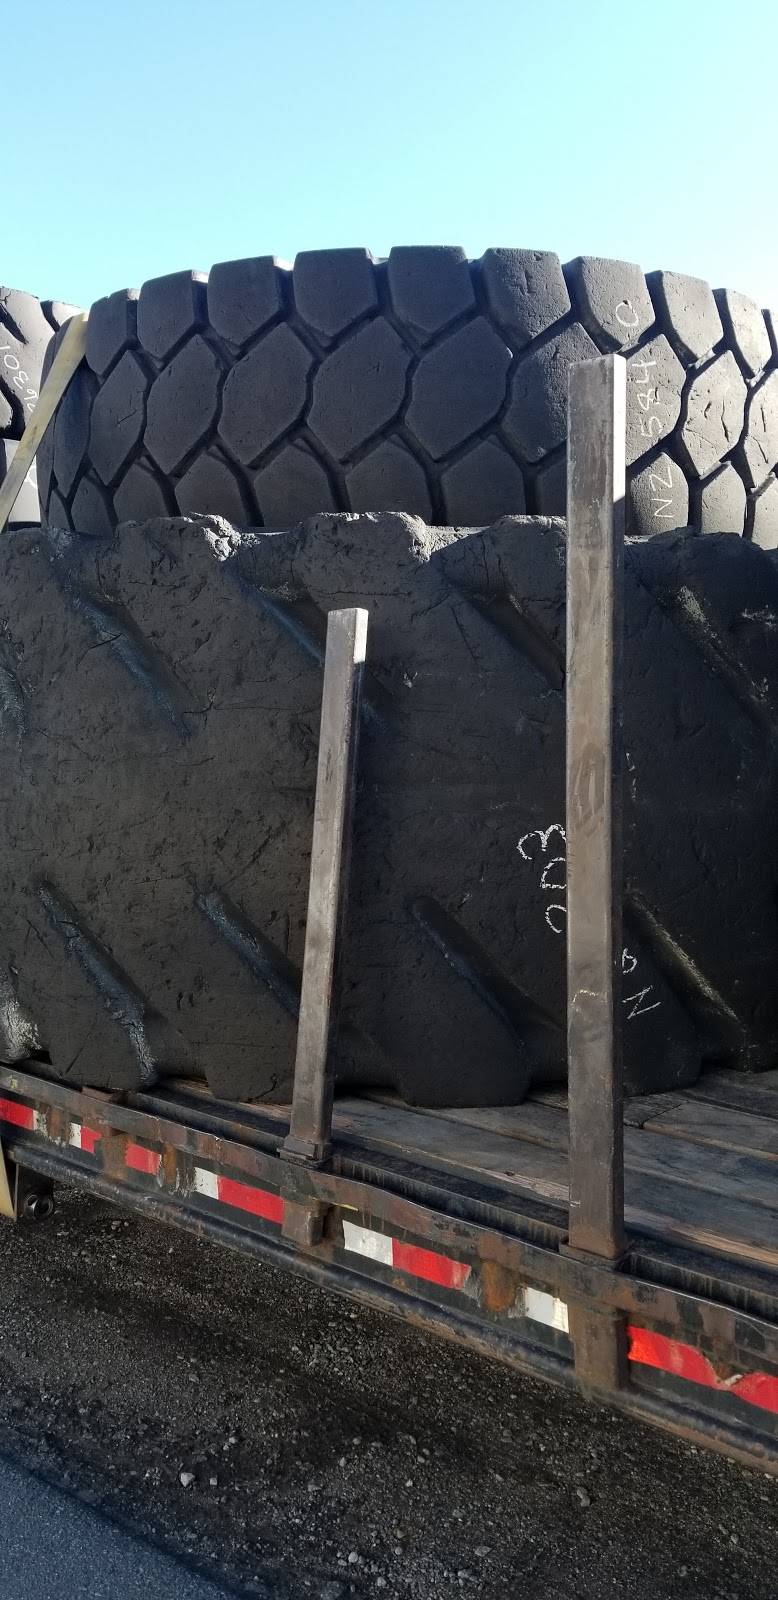 Parrish Tire Commercial Truck Service Center | 292 Kapp St, Winston-Salem, NC 27105, USA | Phone: (336) 661-1392